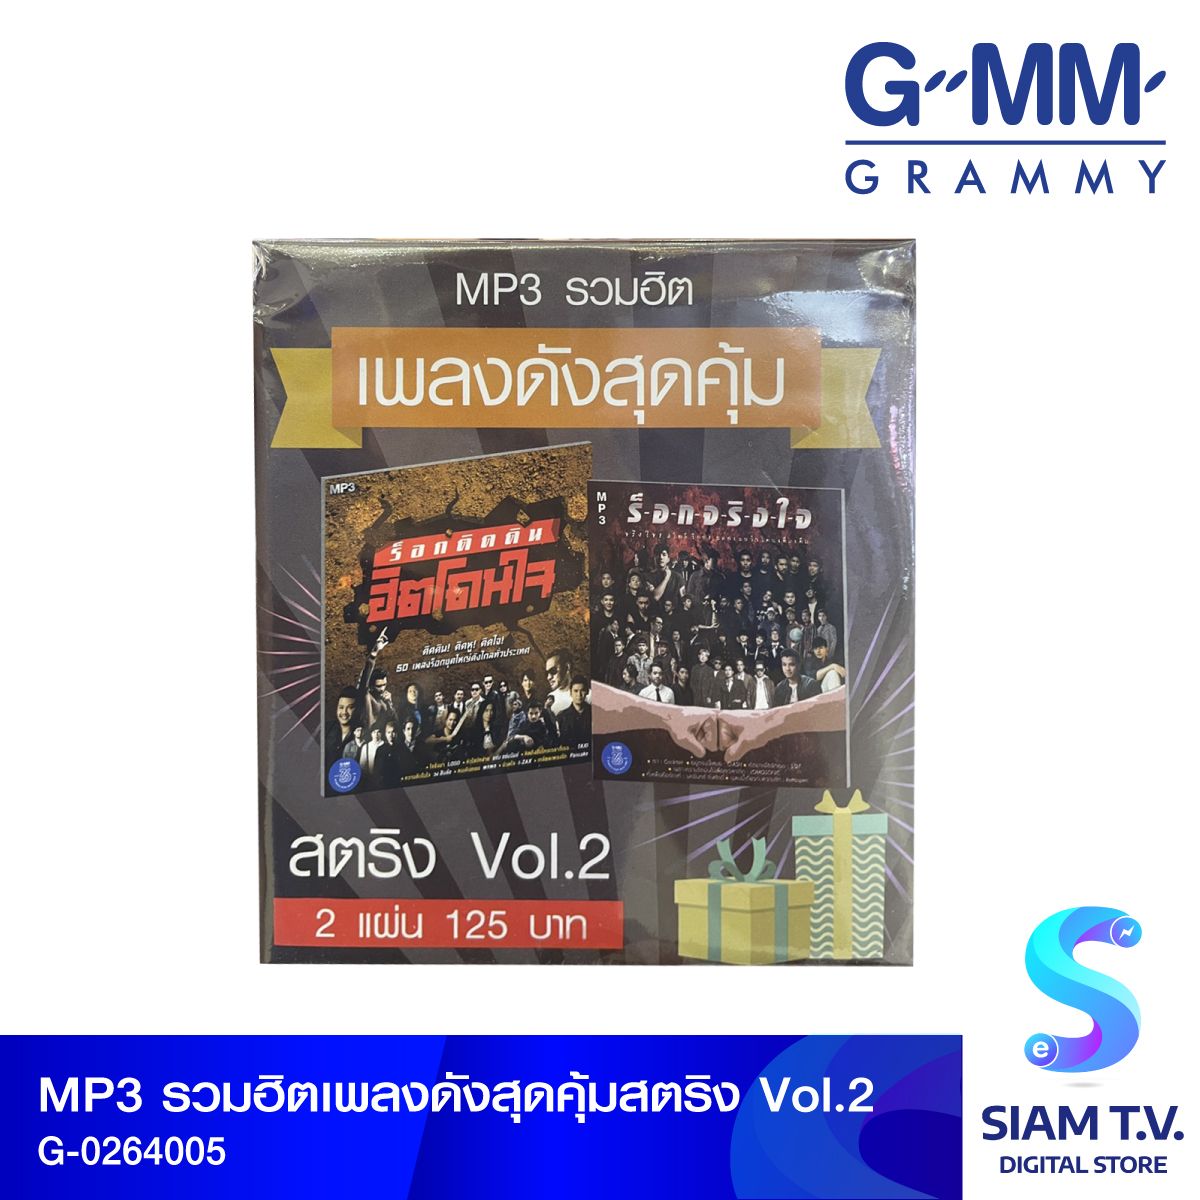 GMM GRAMMY MP3รวมเพลงฮิตดังสุดคุ้มสตริงVol.2